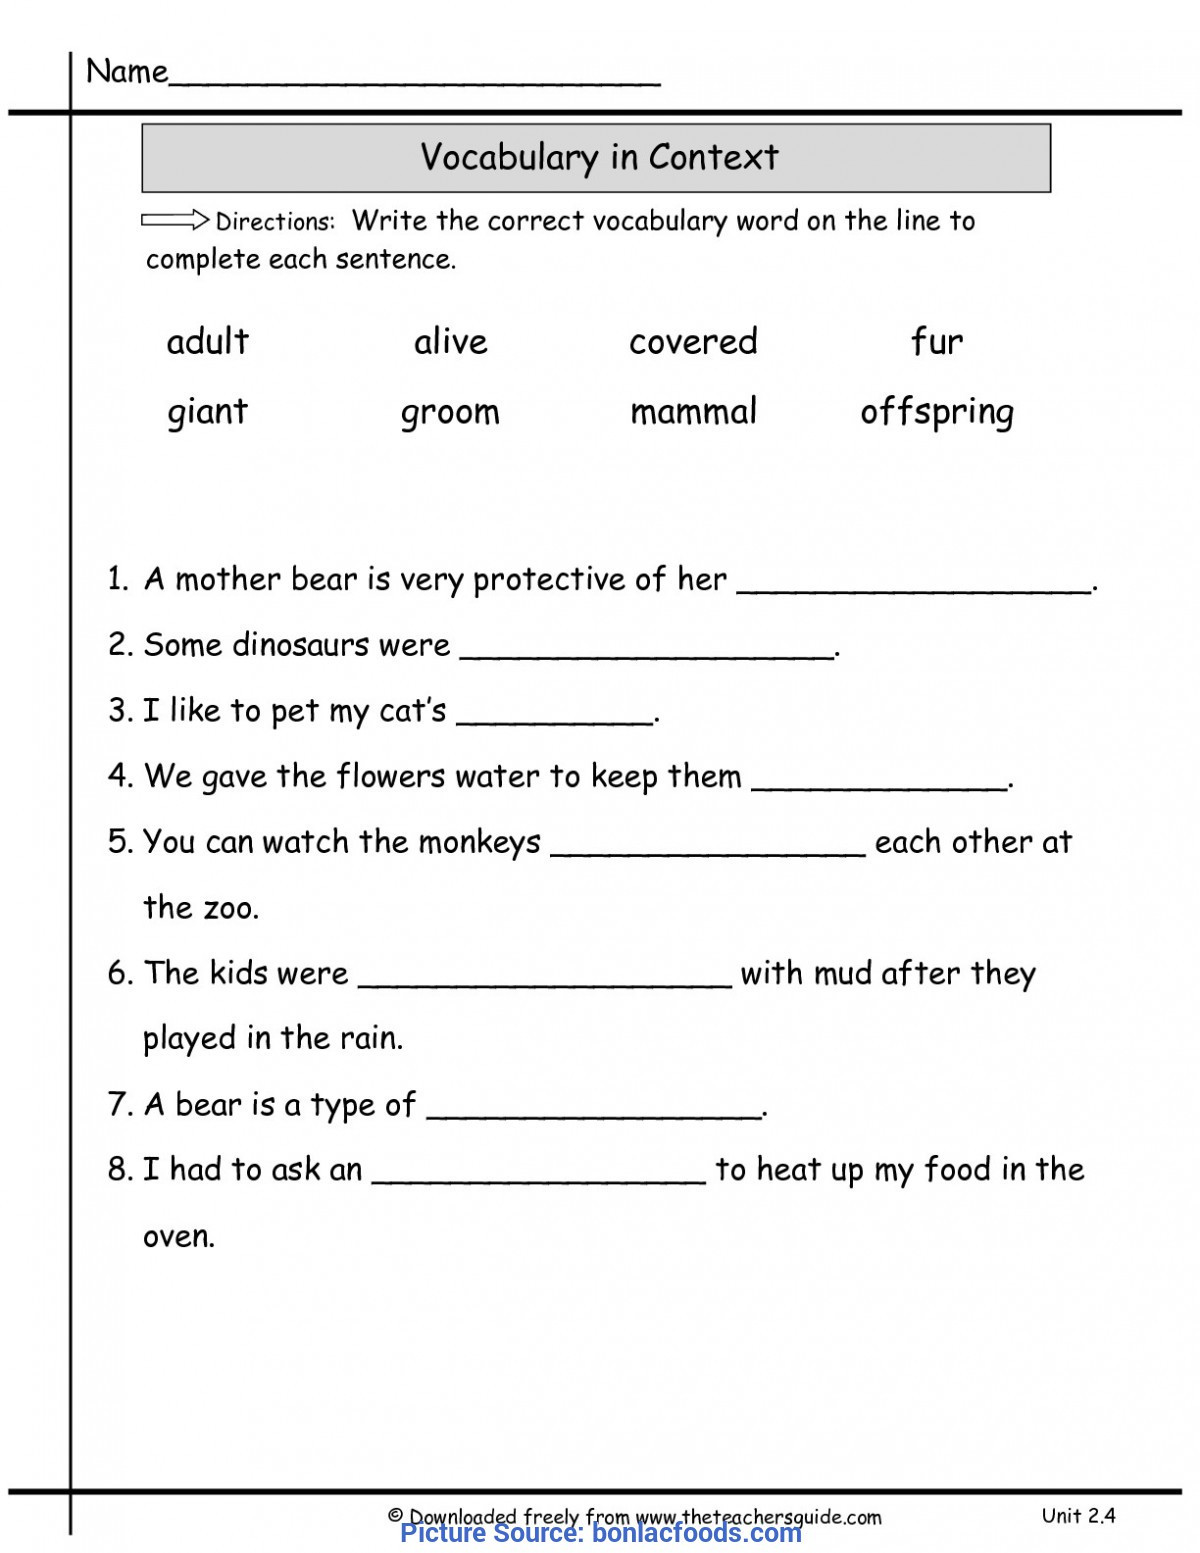 Second Grade social Studies Worksheets Valuable social Stu S Lessons for 2nd Grade Worksheets for